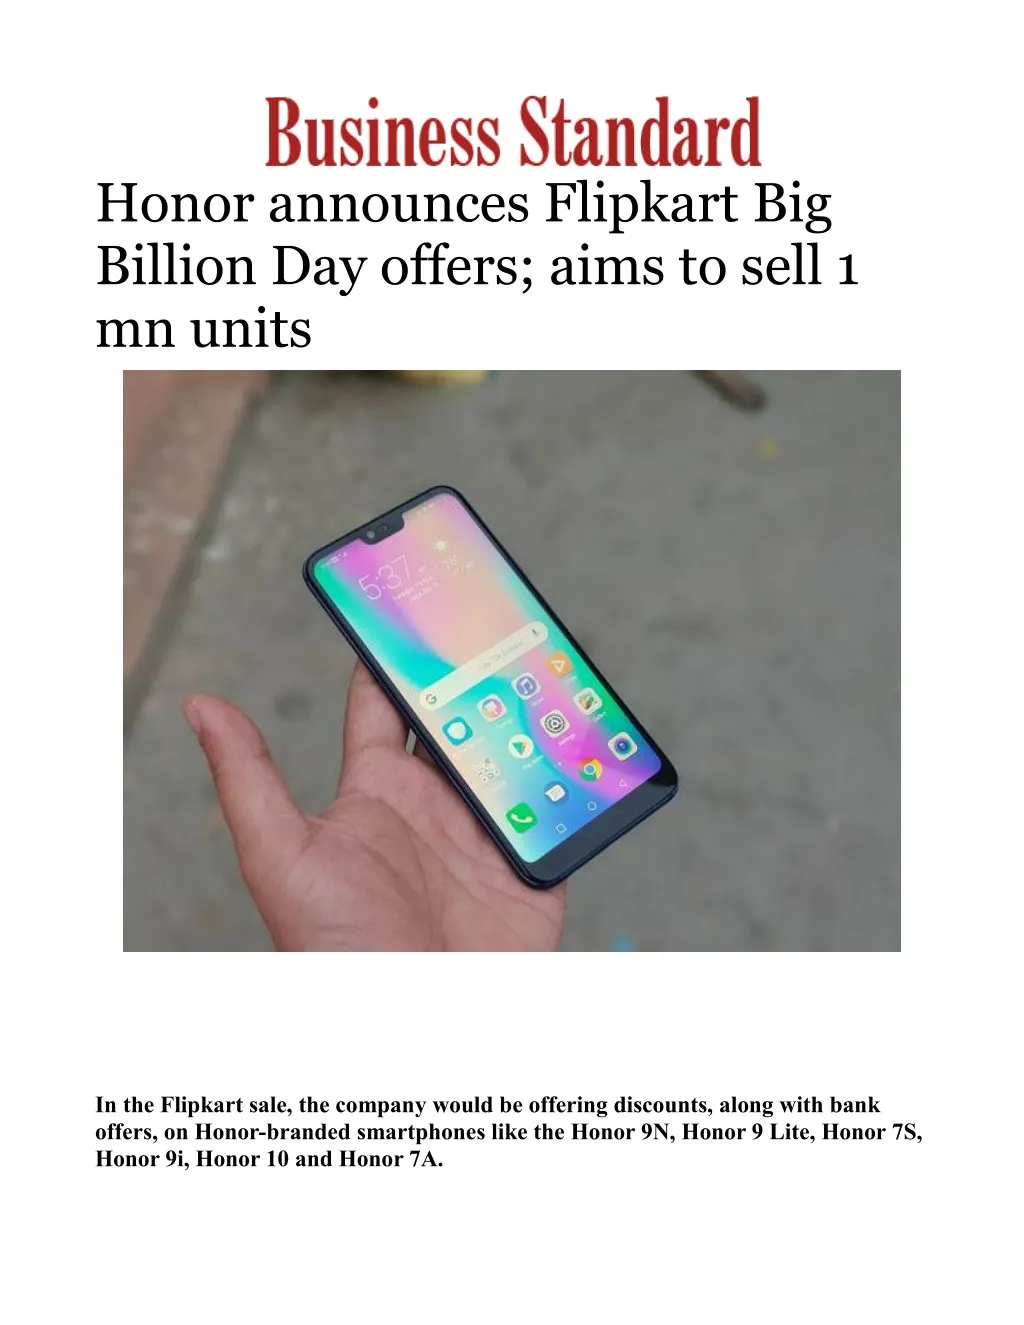 honor announces flipkart big billion day offers